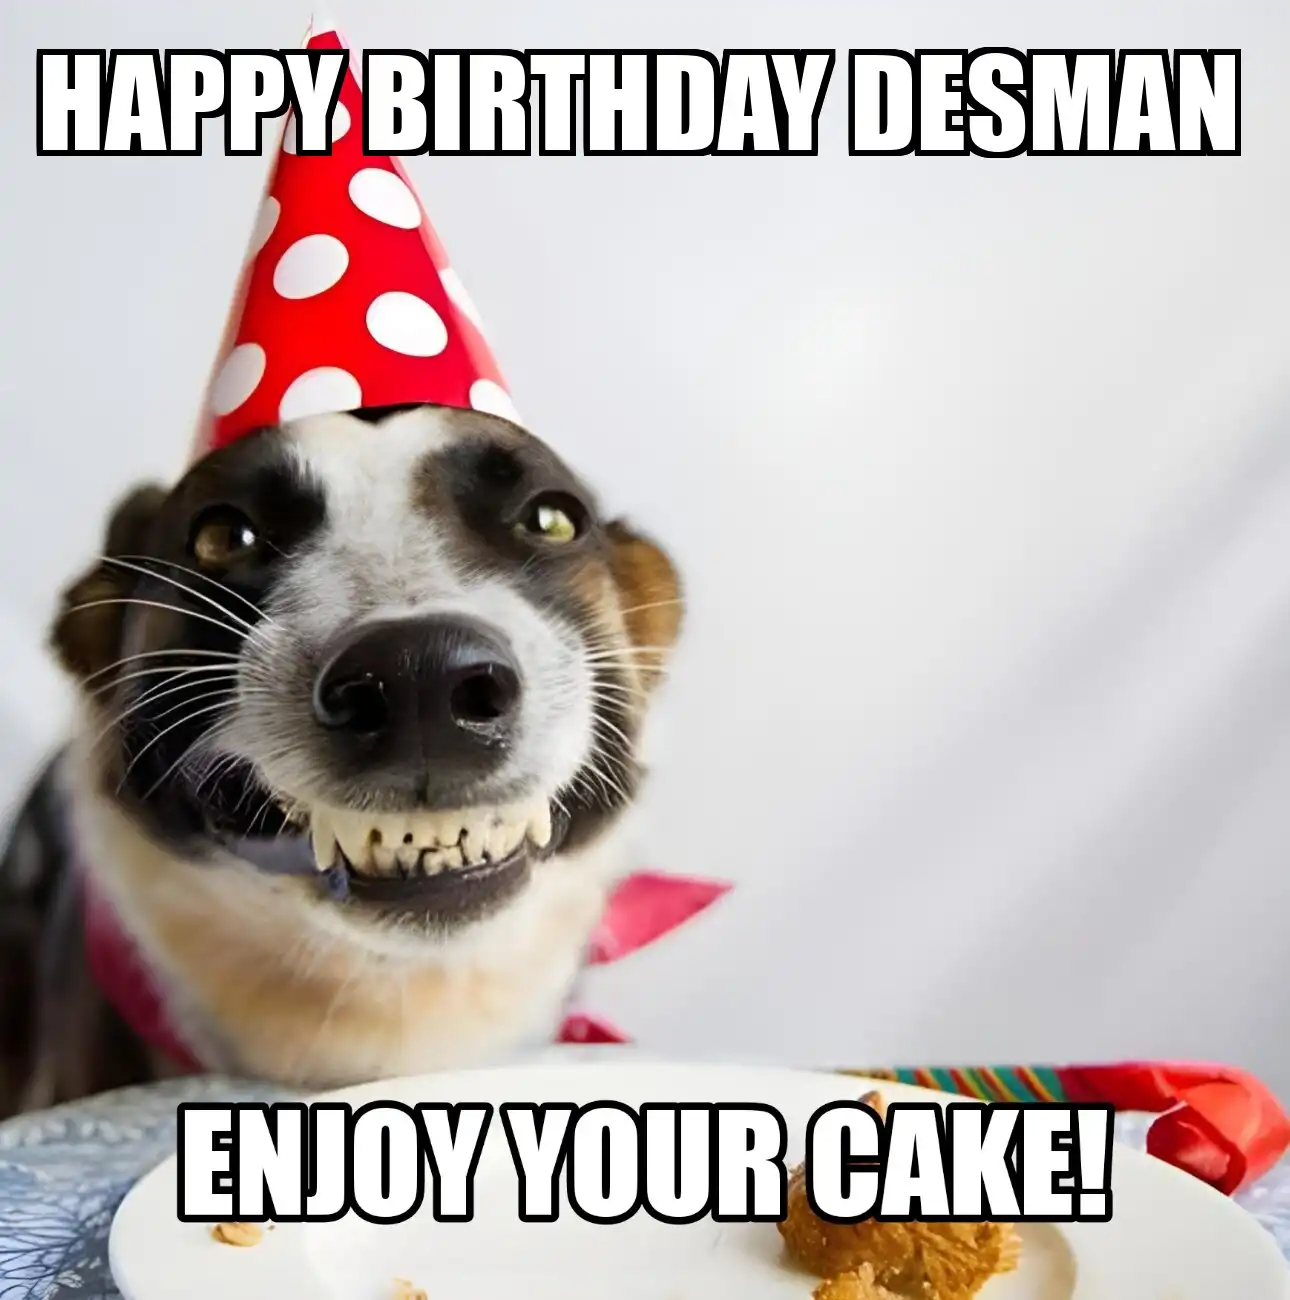 Happy Birthday Desman Enjoy Your Cake Dog Meme